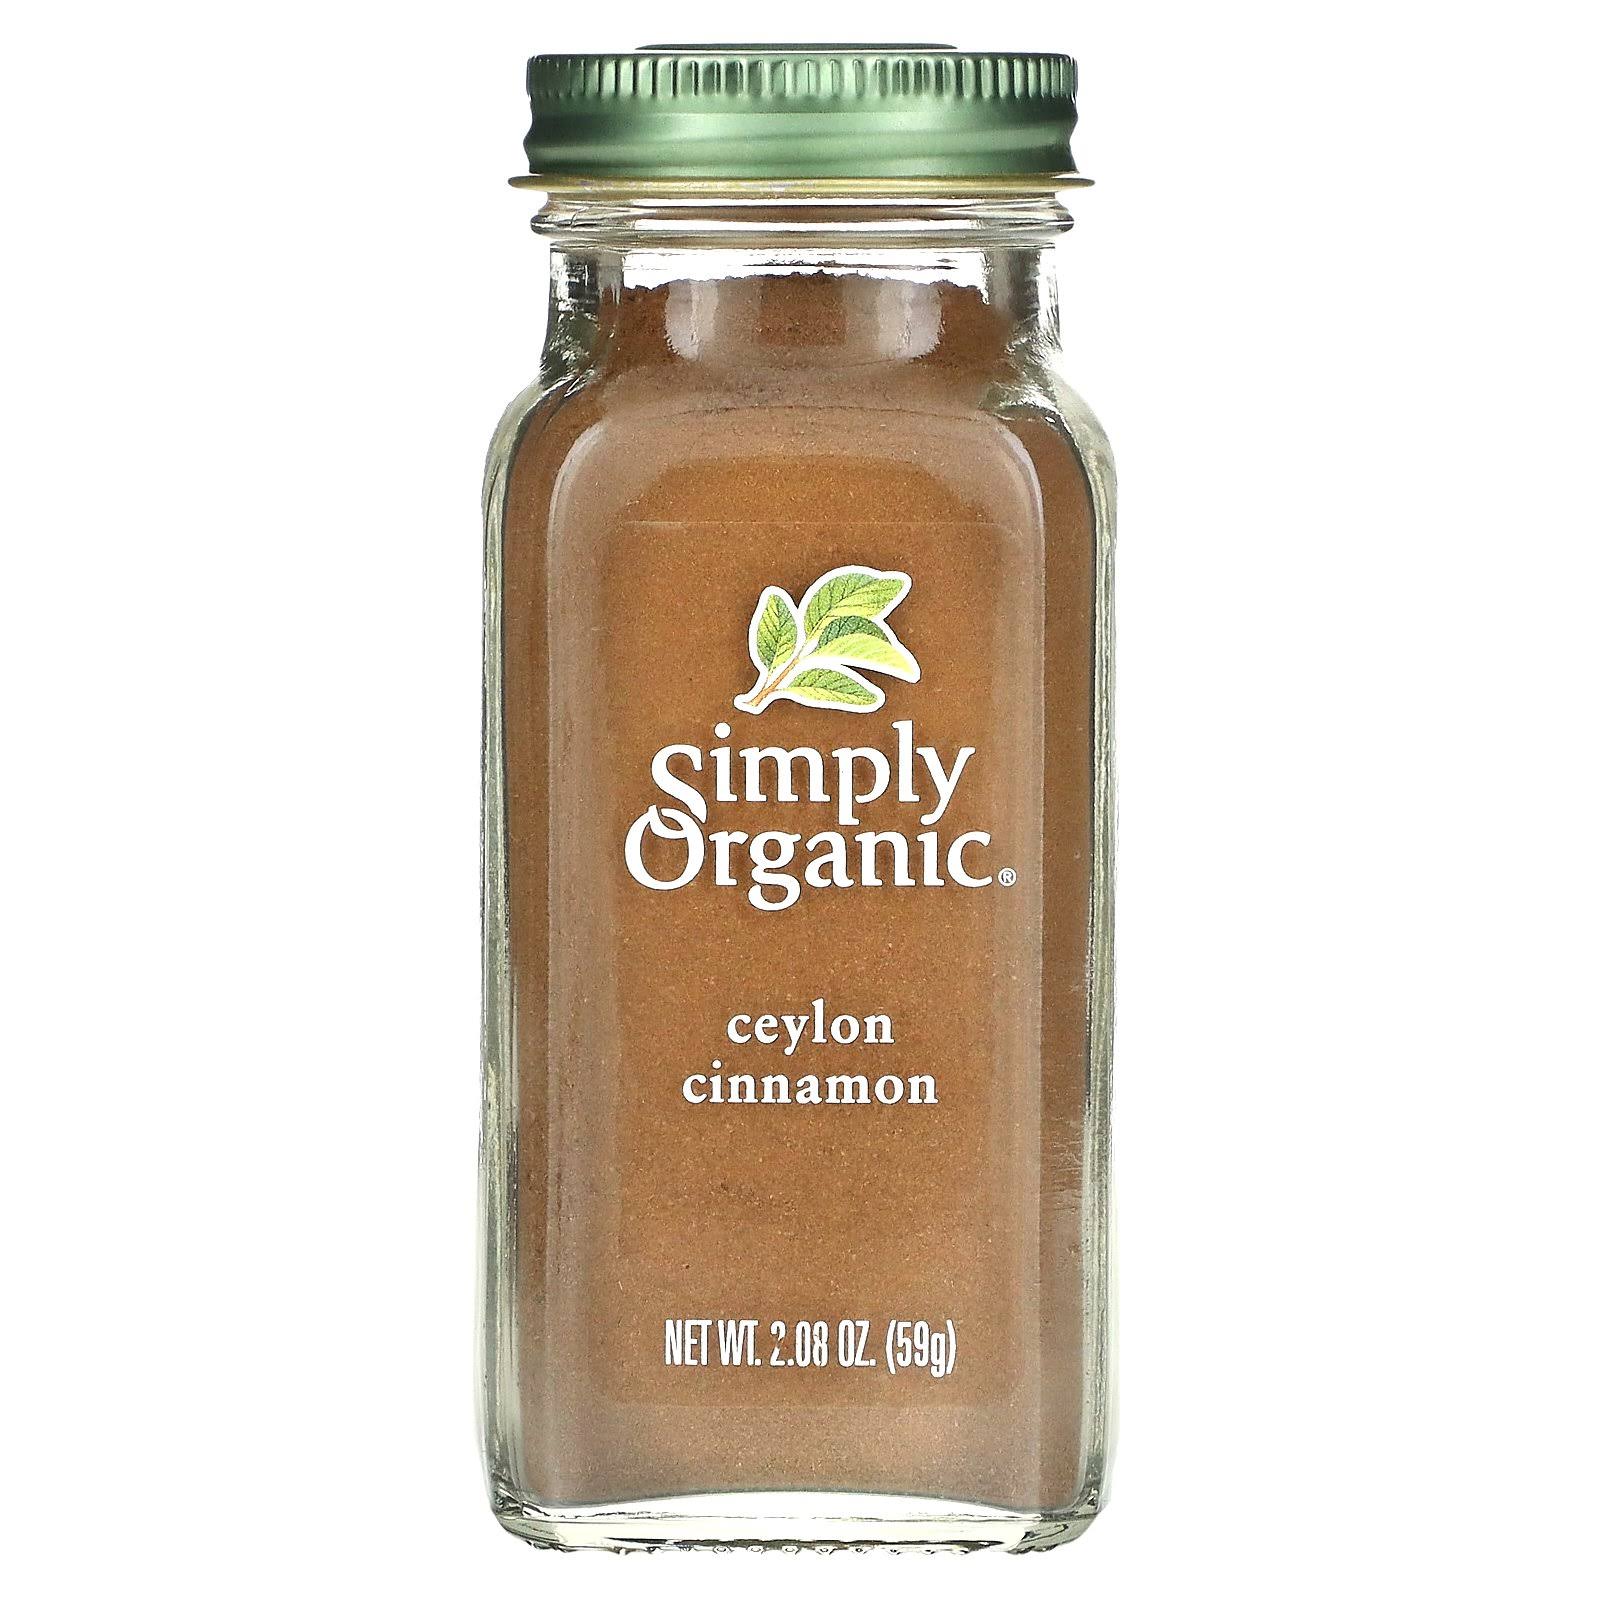 Simply Organic - Cinnamon, 59g